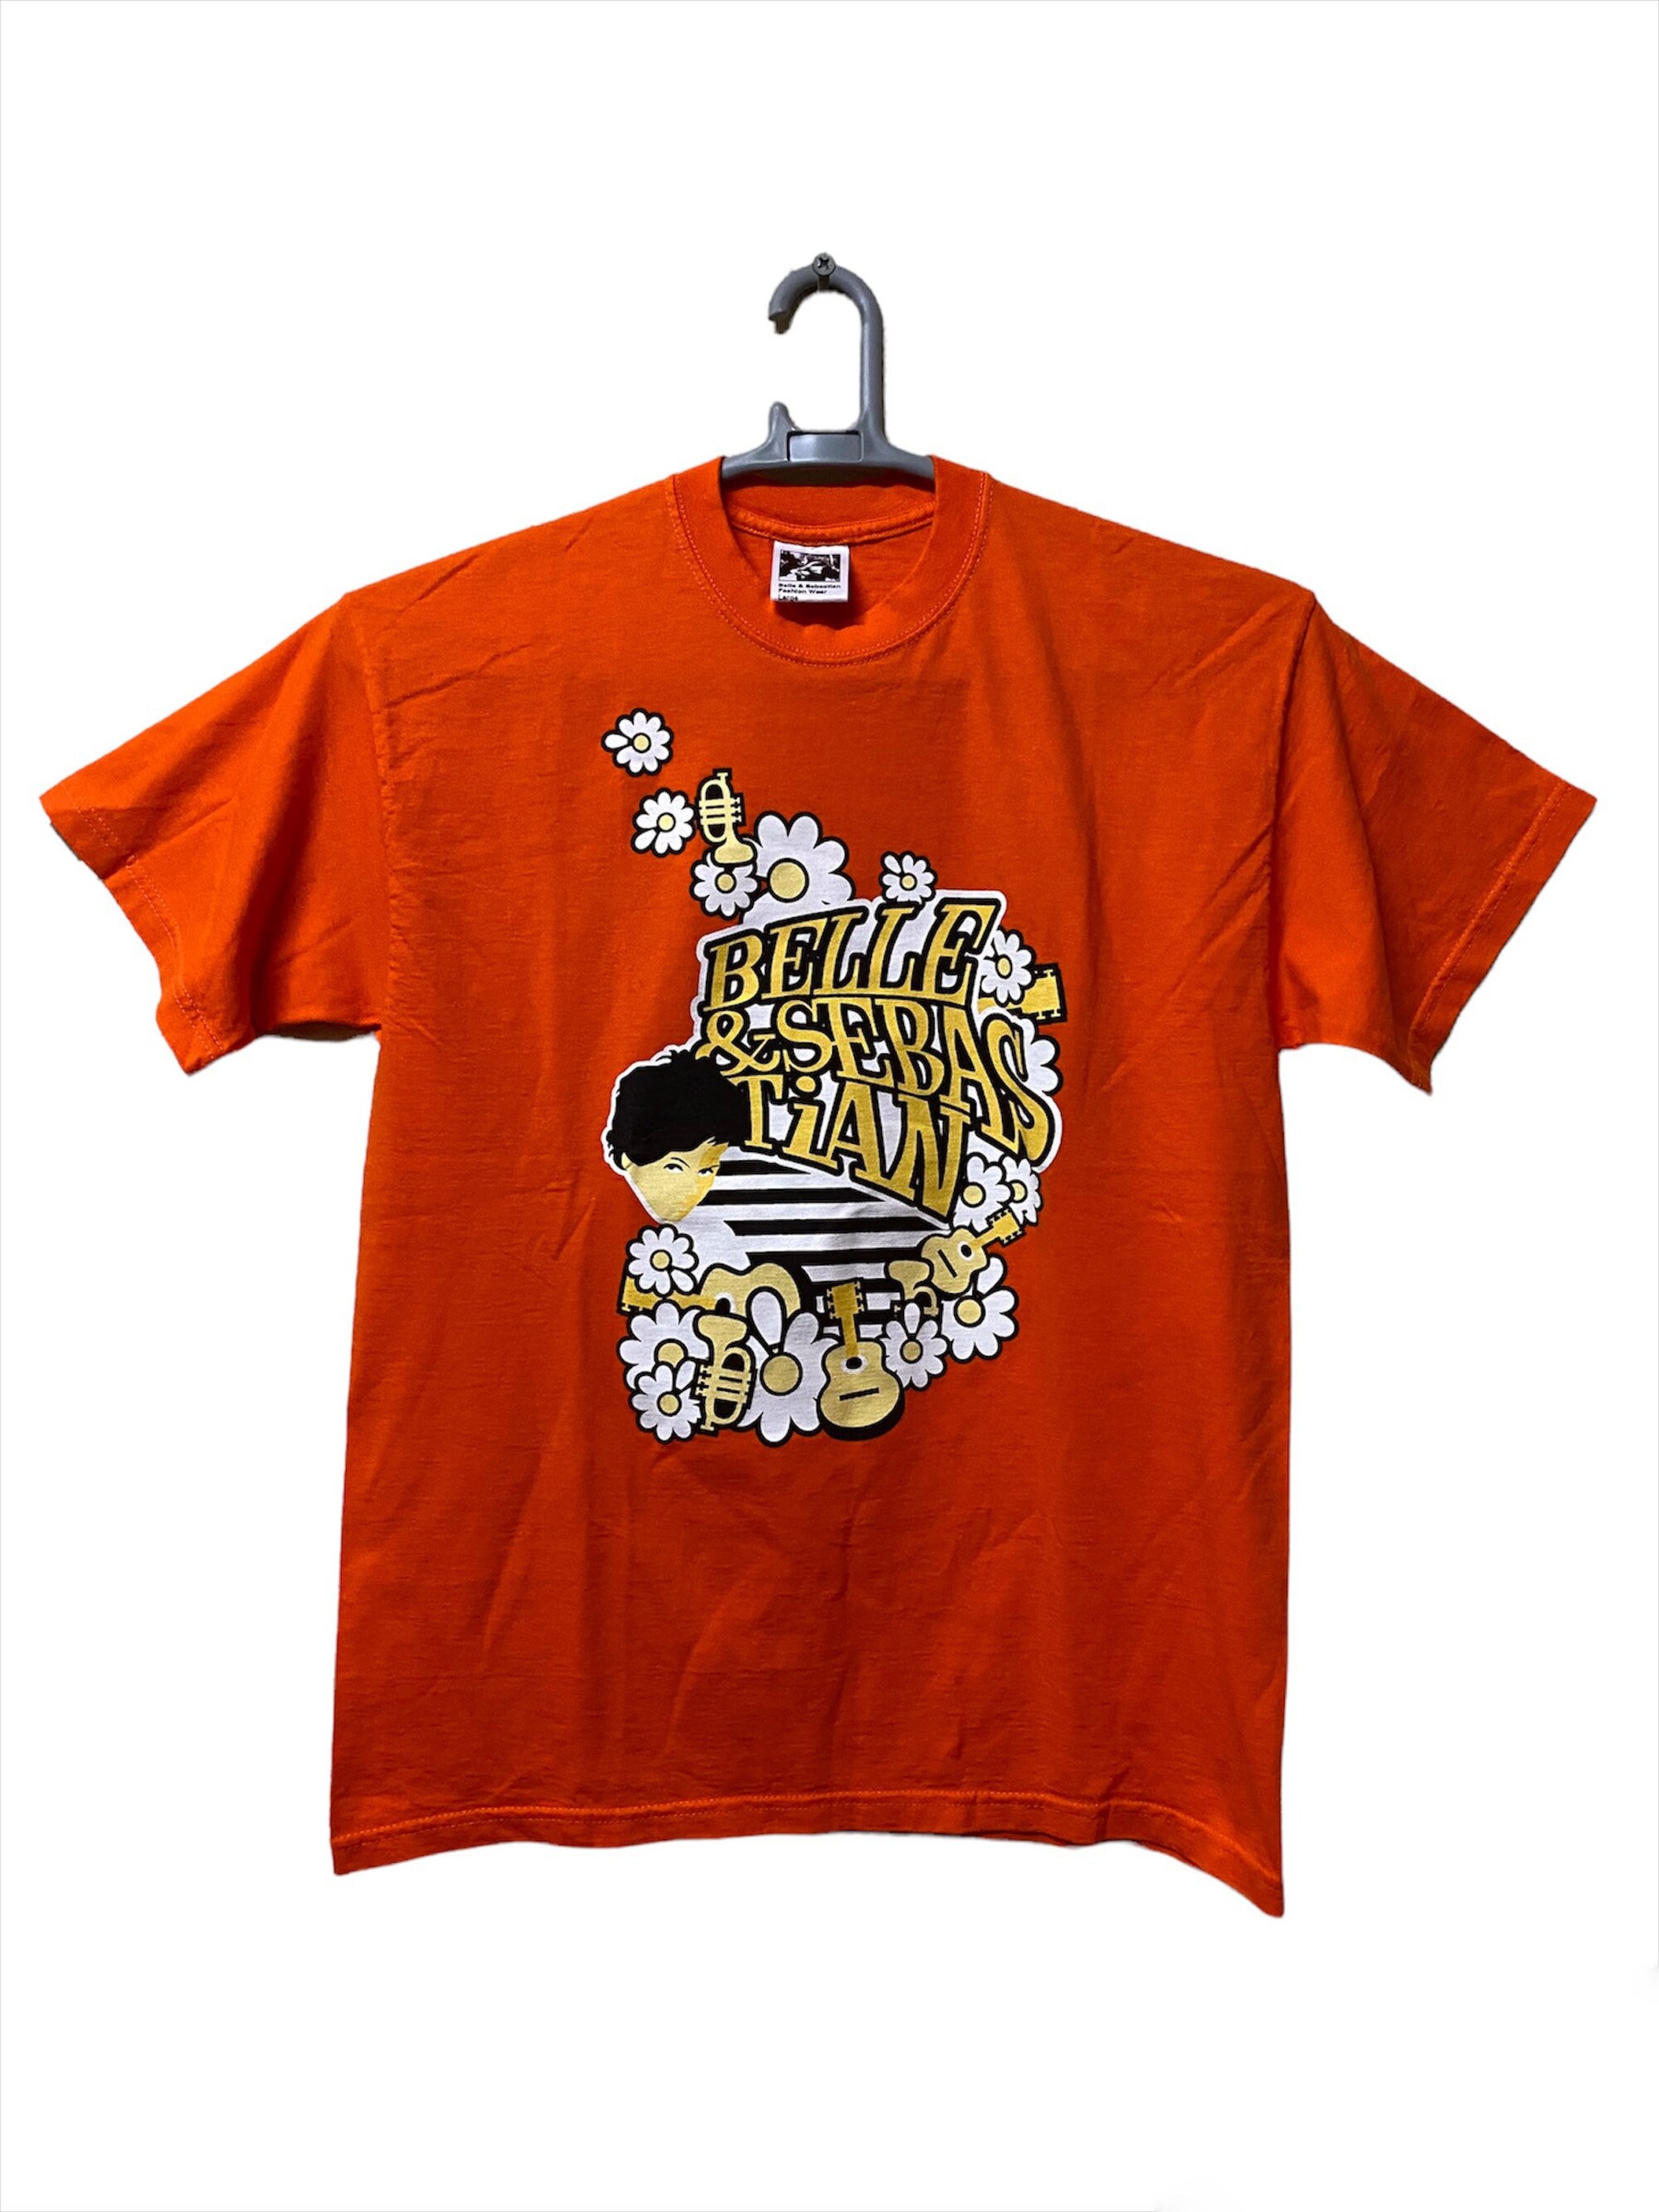 Discover Vintage Belle & Sebastian scottish indie britpop music T-shirt orange colour